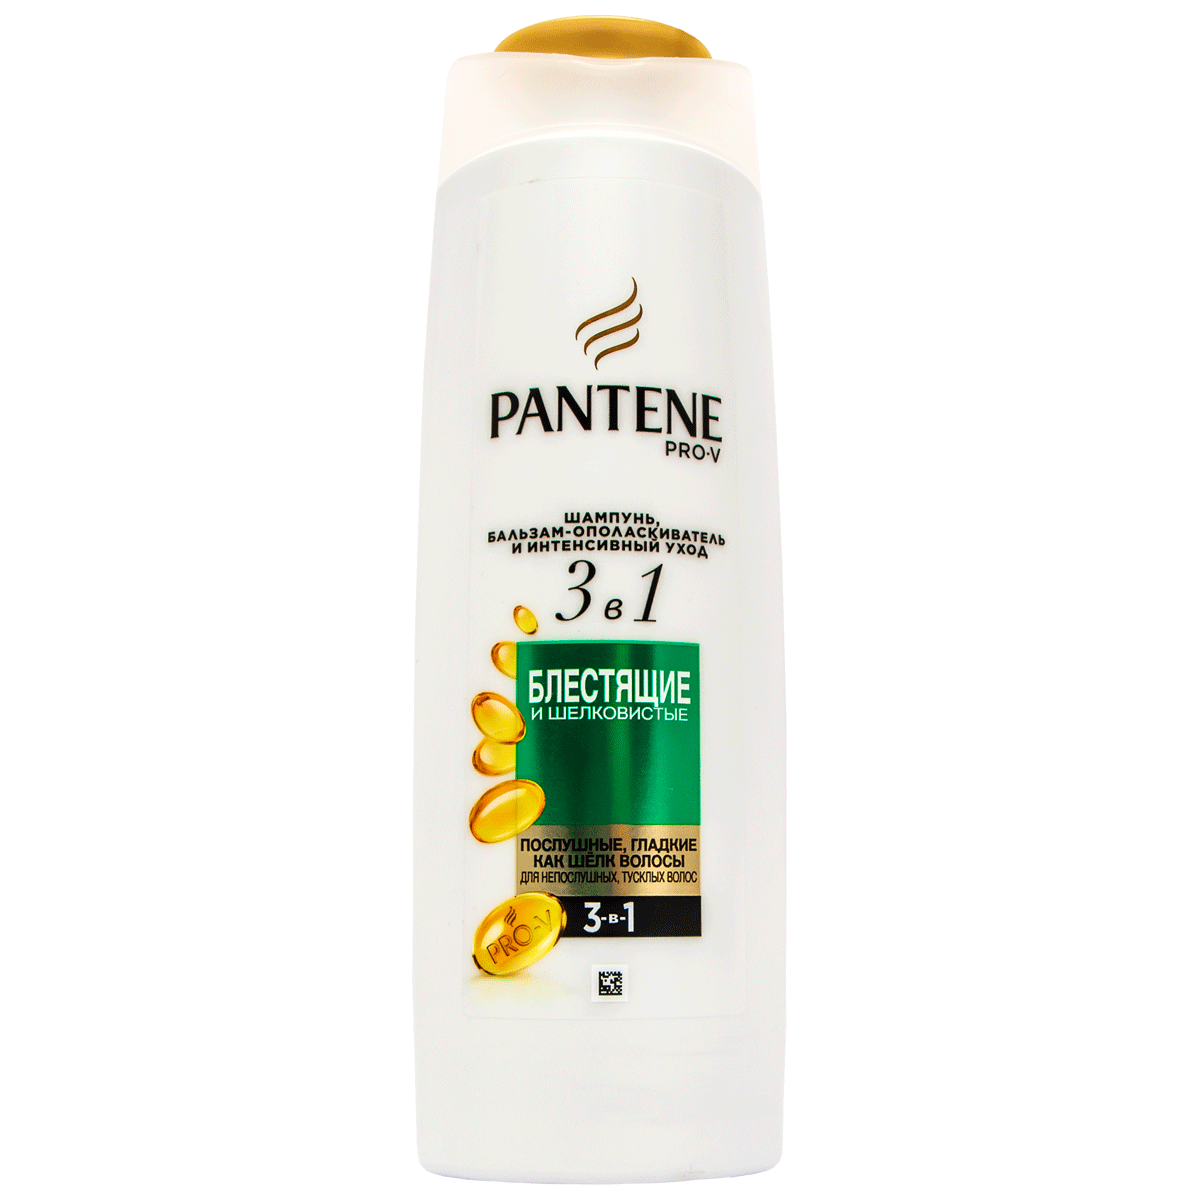 Shampoo Pantene